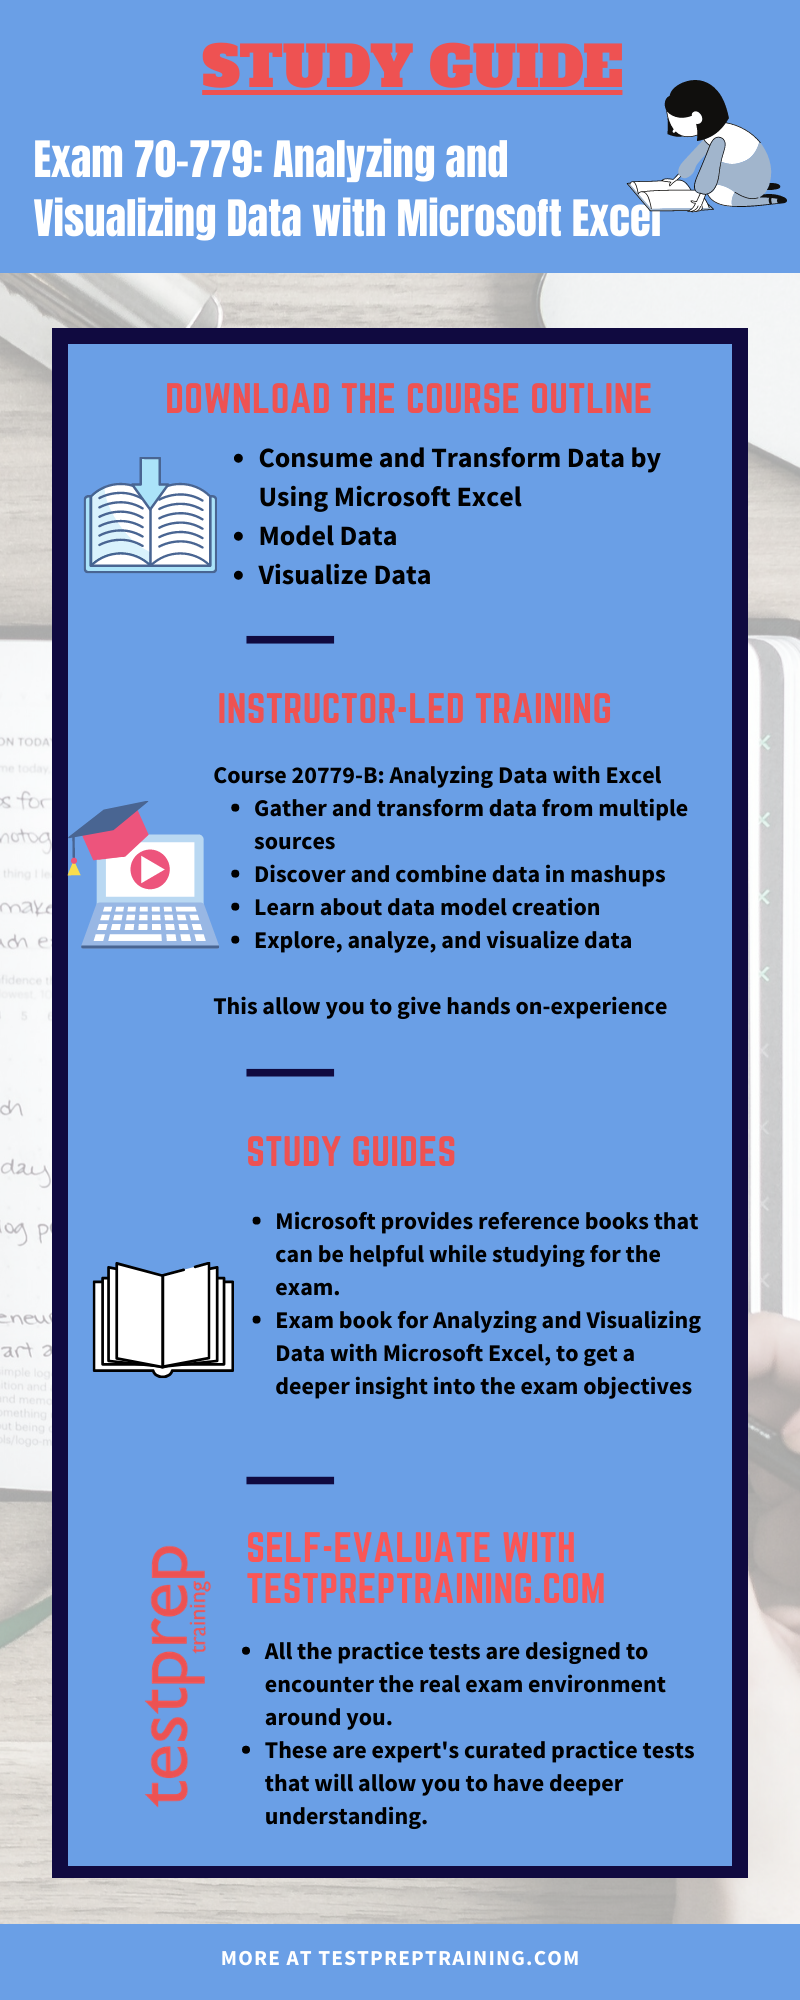 Microsoft 70-779 exam study guide